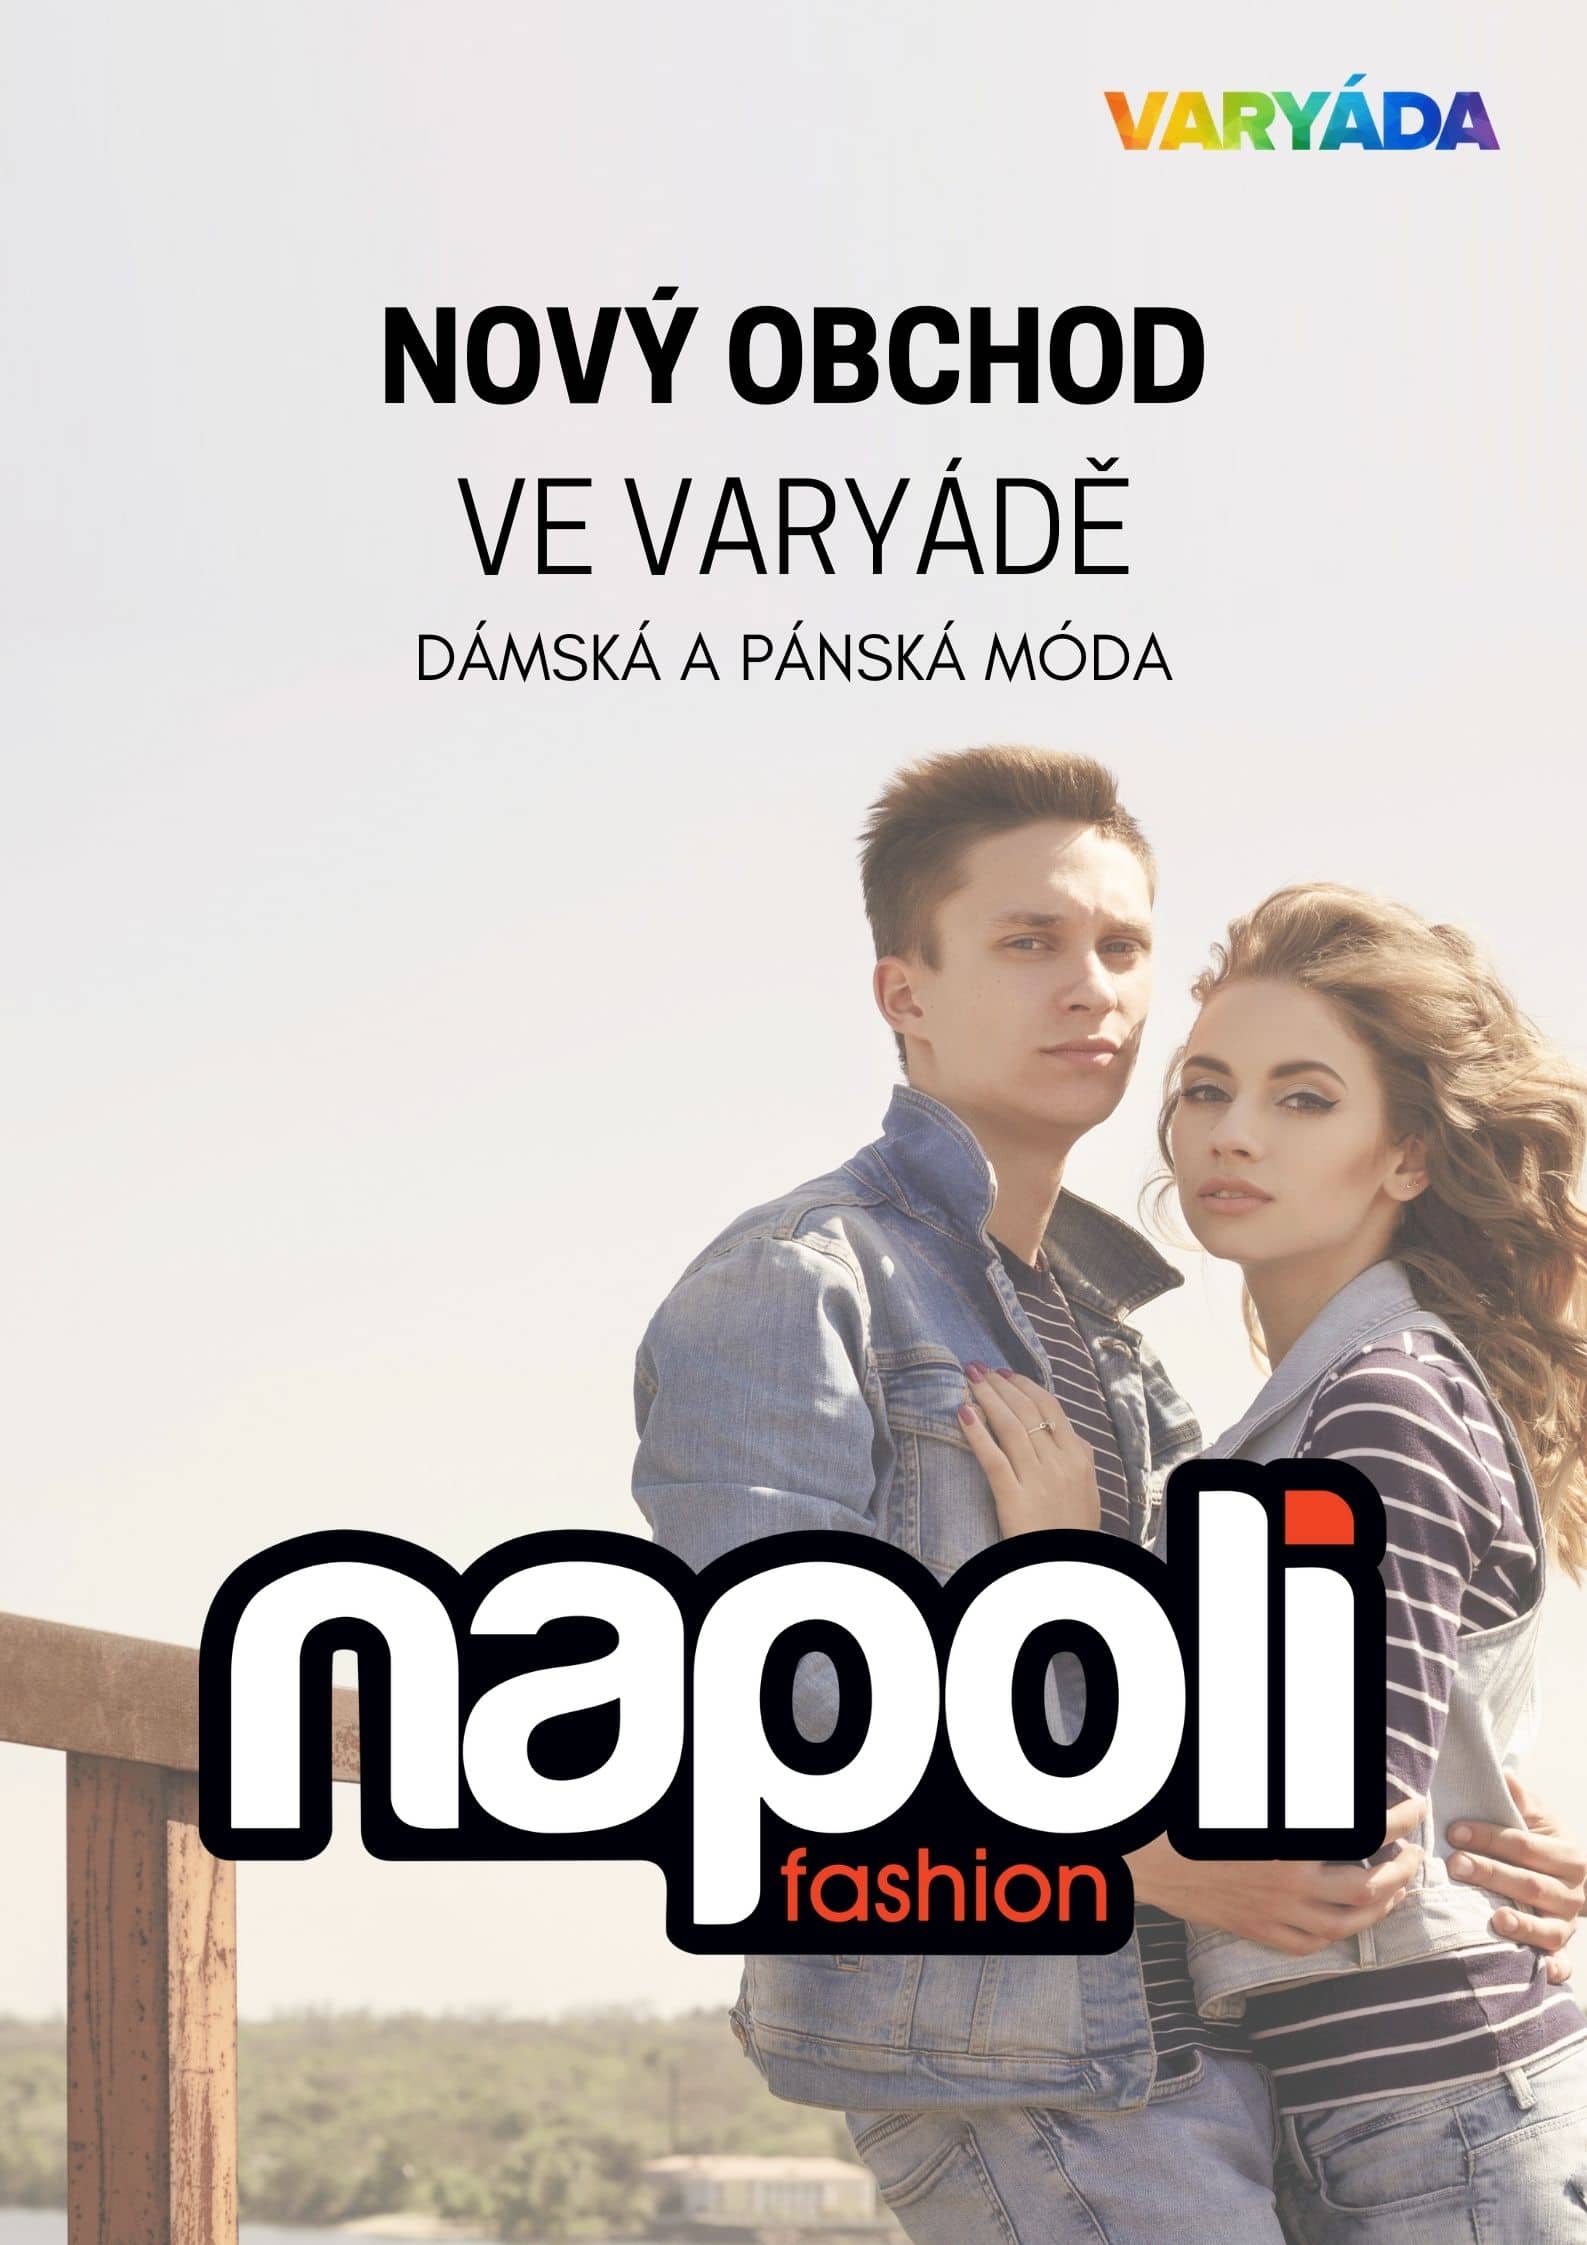 Napoli fashion nový obchod